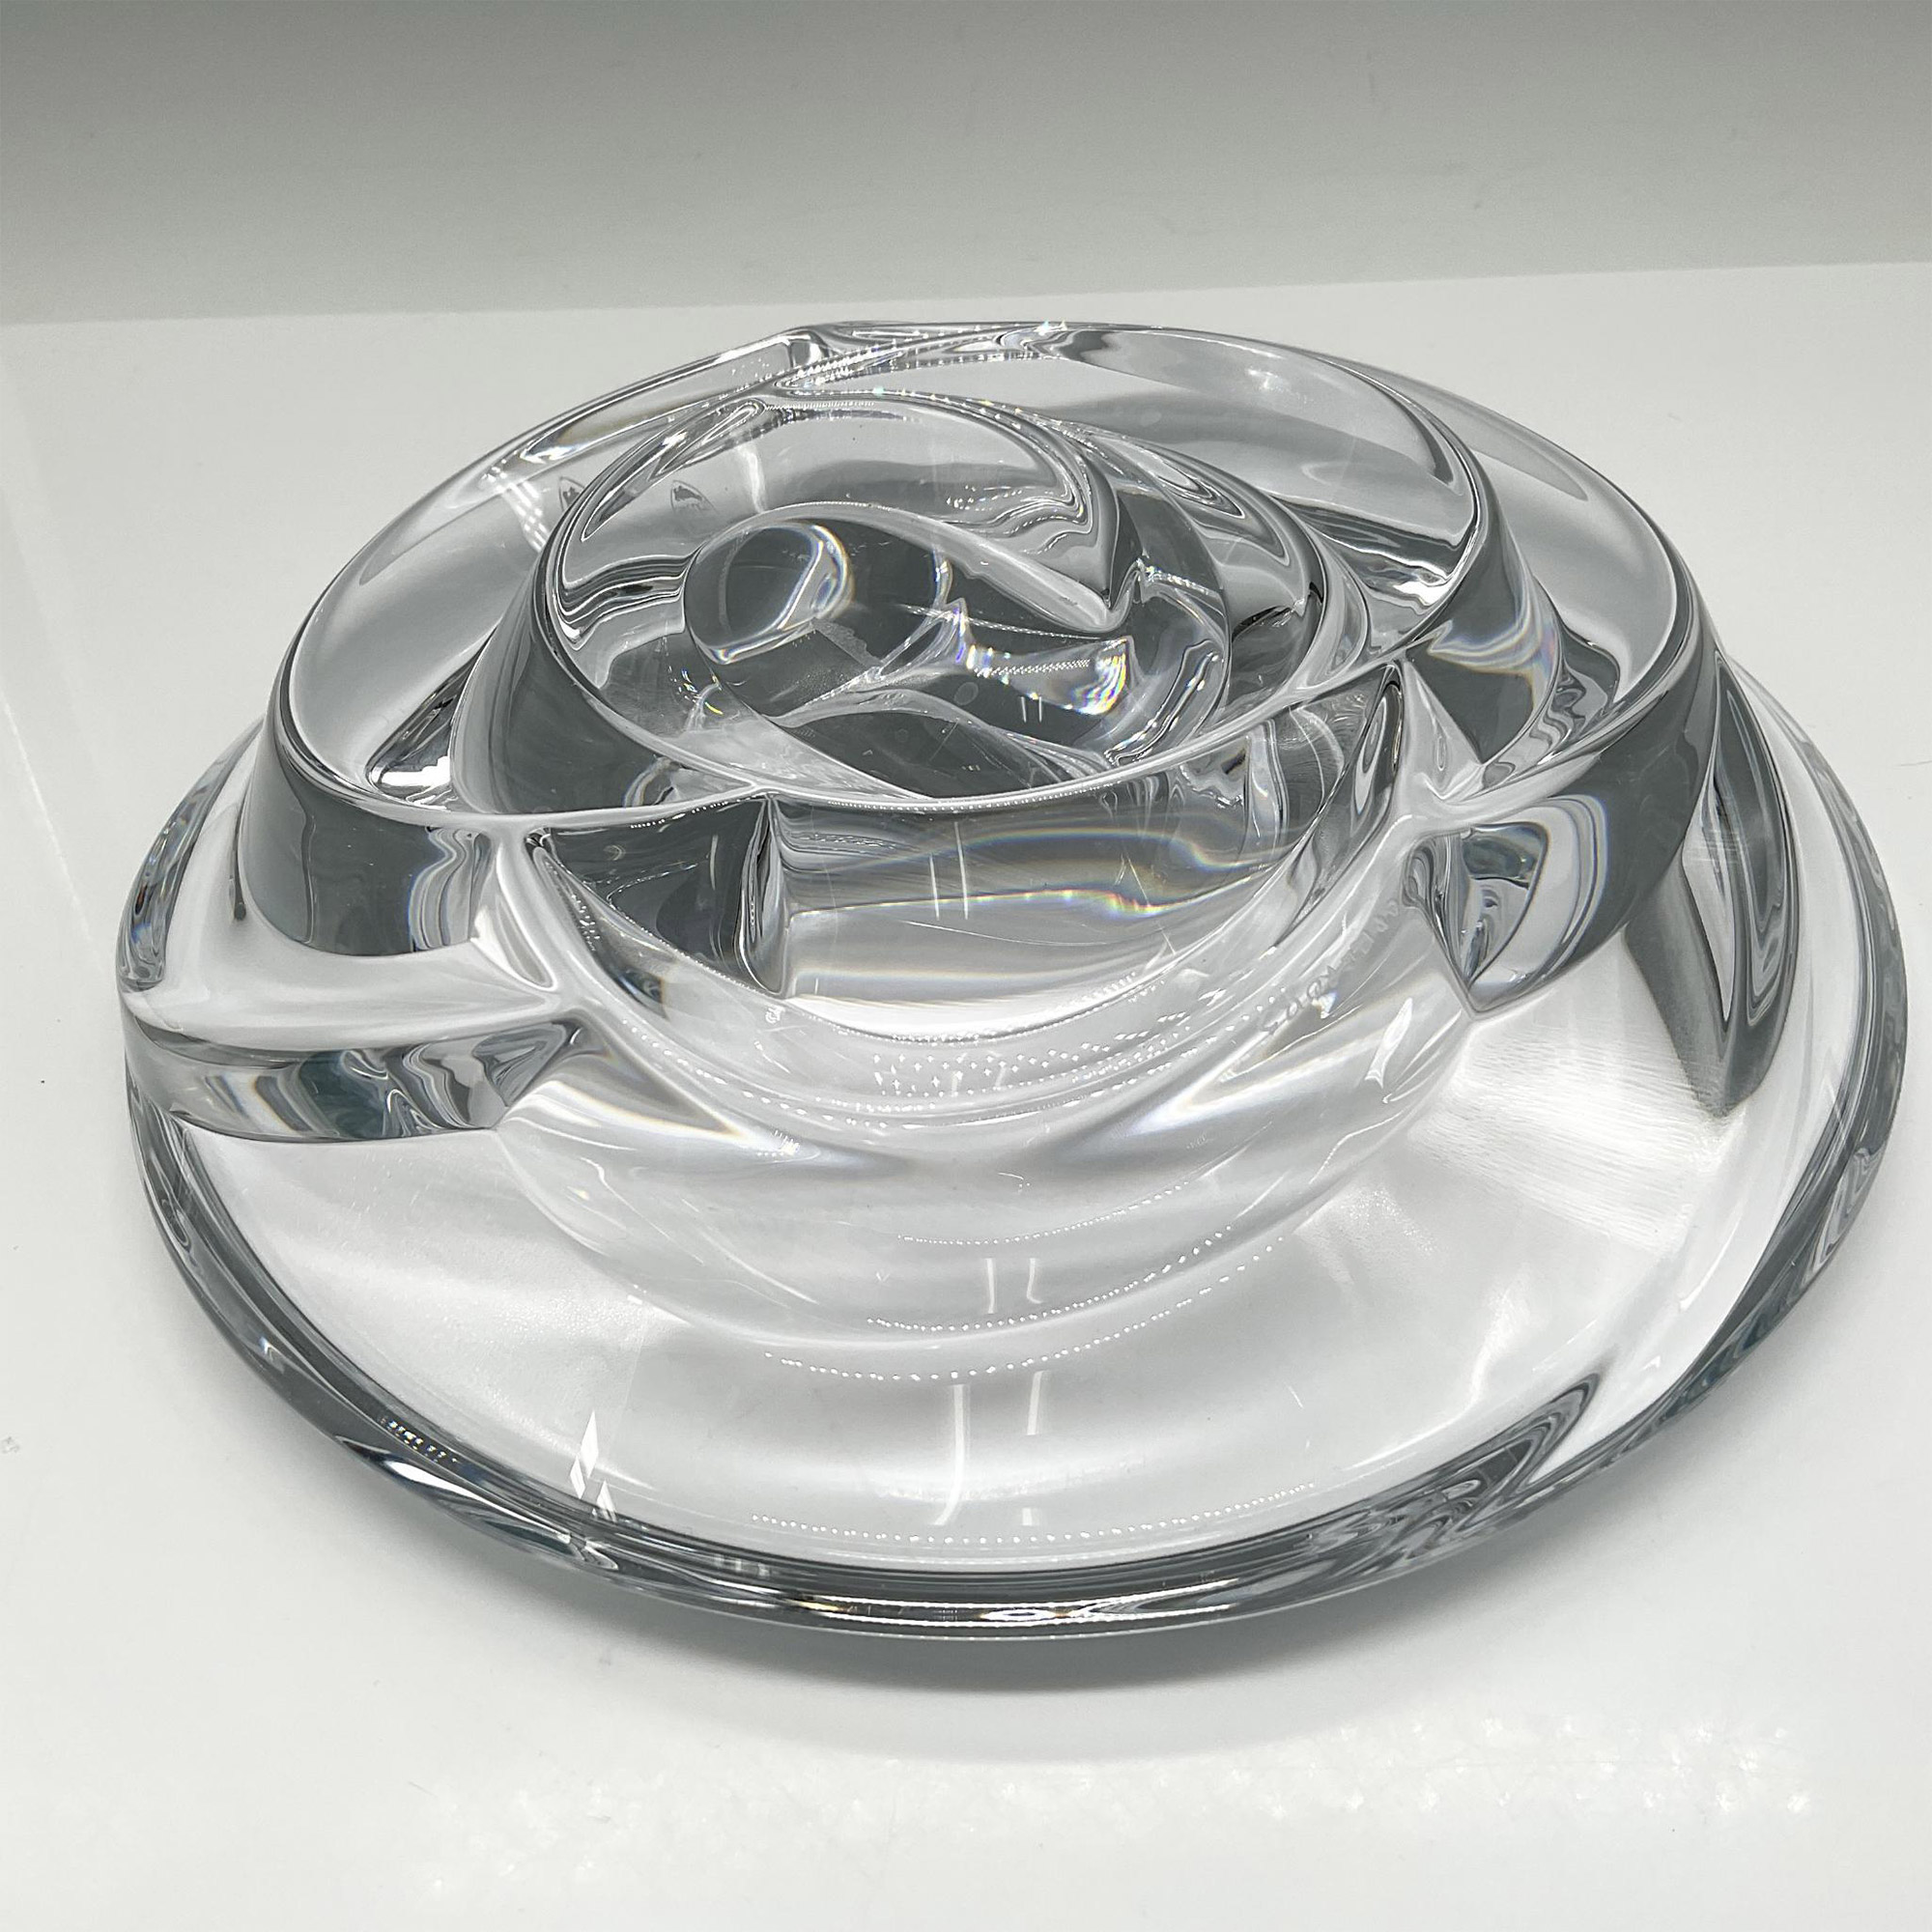 Orrefors Crystal Decorative Bowl - Image 3 of 3